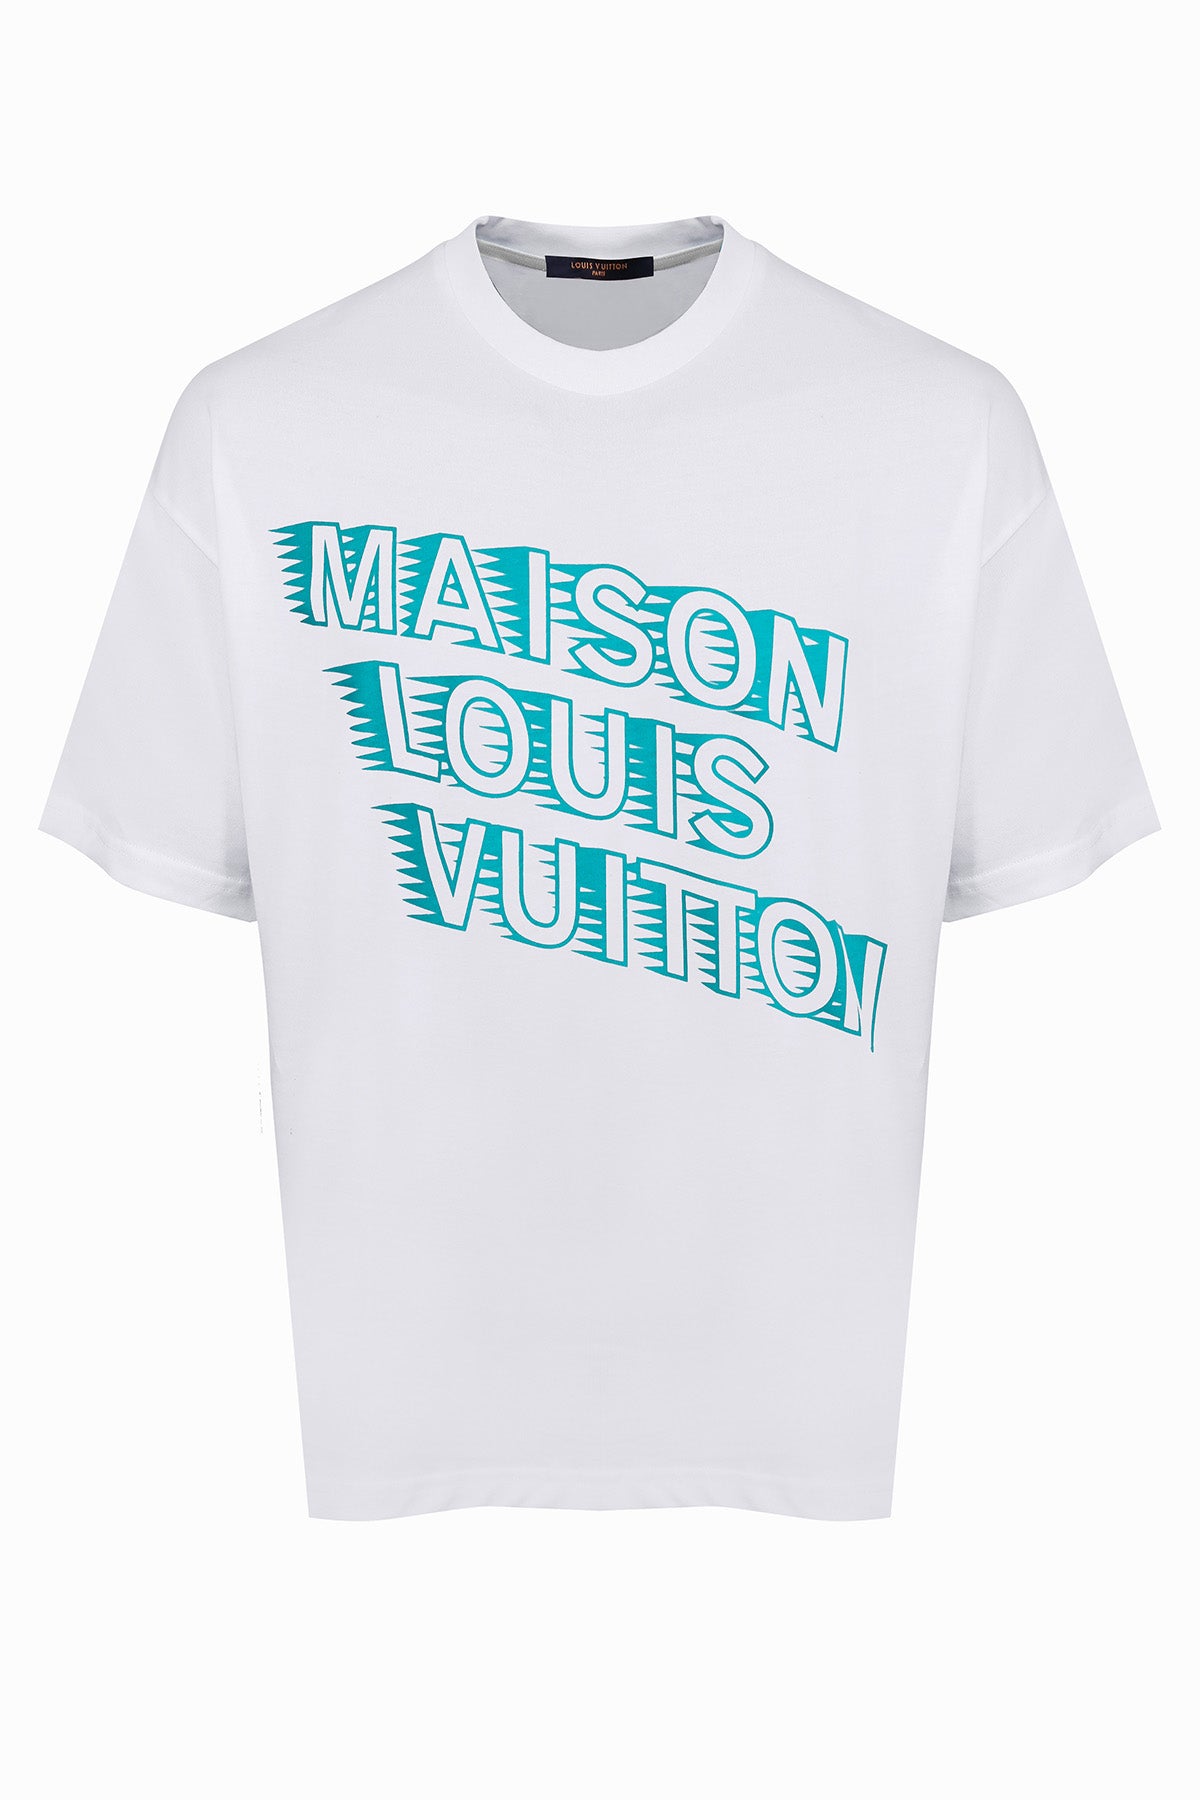 LOUIS VUITTON MAISON LV WHITE T-SHIRT